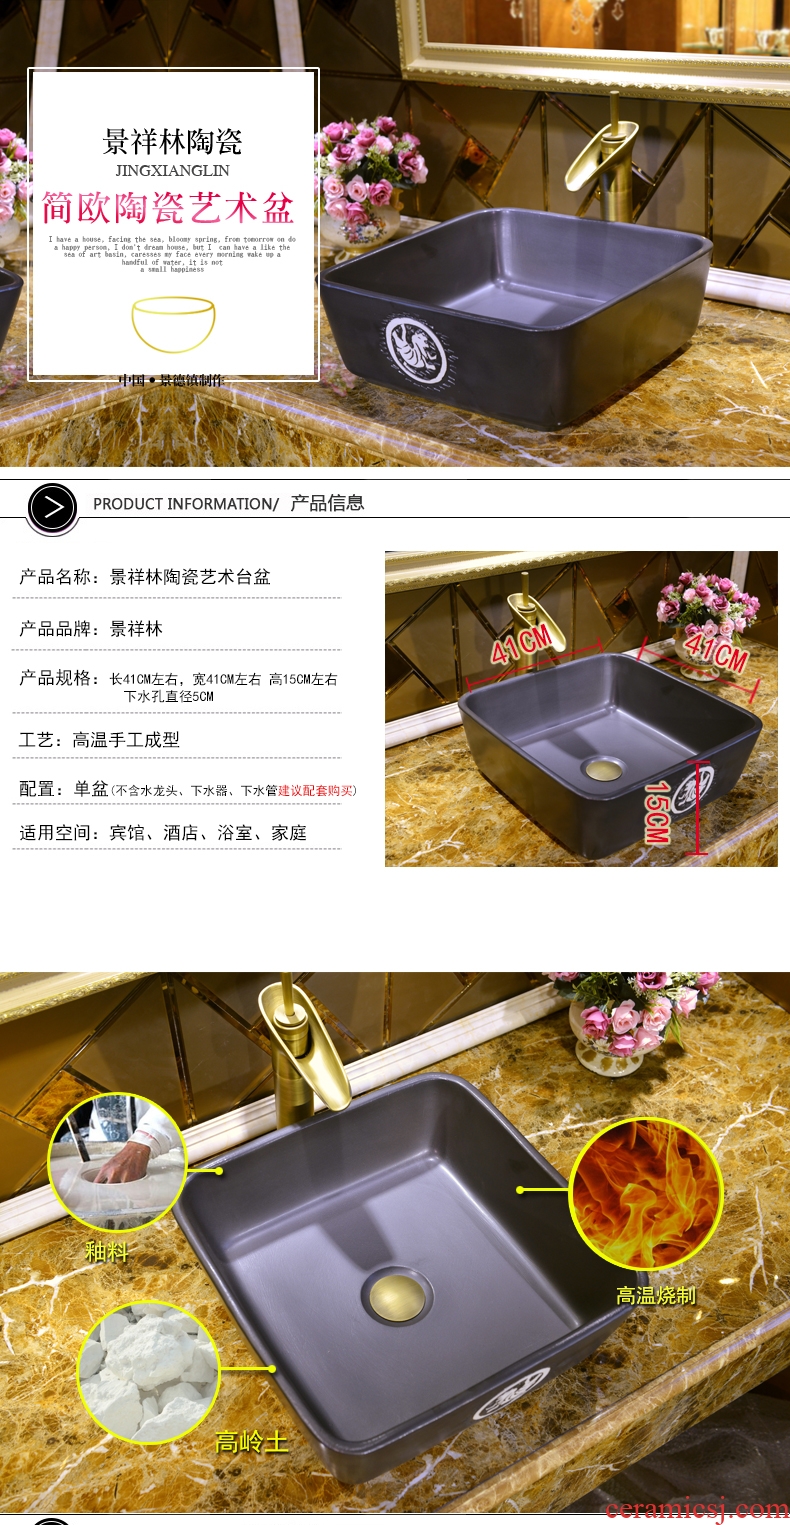 JingXiangLin European contracted jingdezhen traditional manual basin on the lavatory basin & ndash; & ndash; The badge